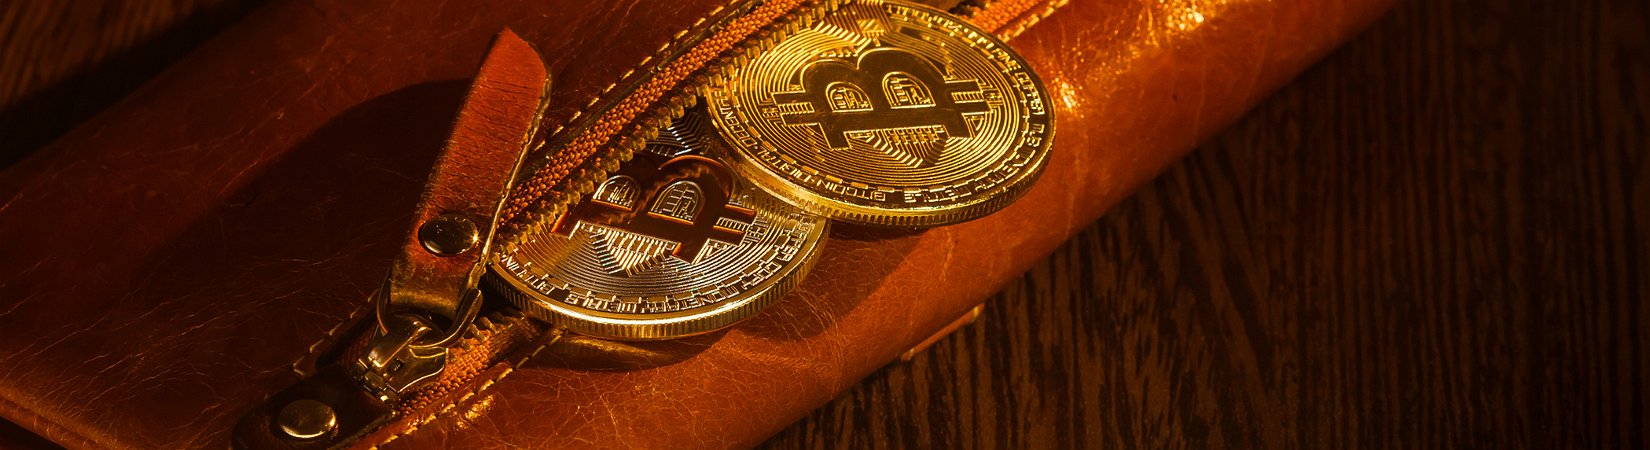 Bitcoin gold калькулятор банки в волгодонске обмен биткоин